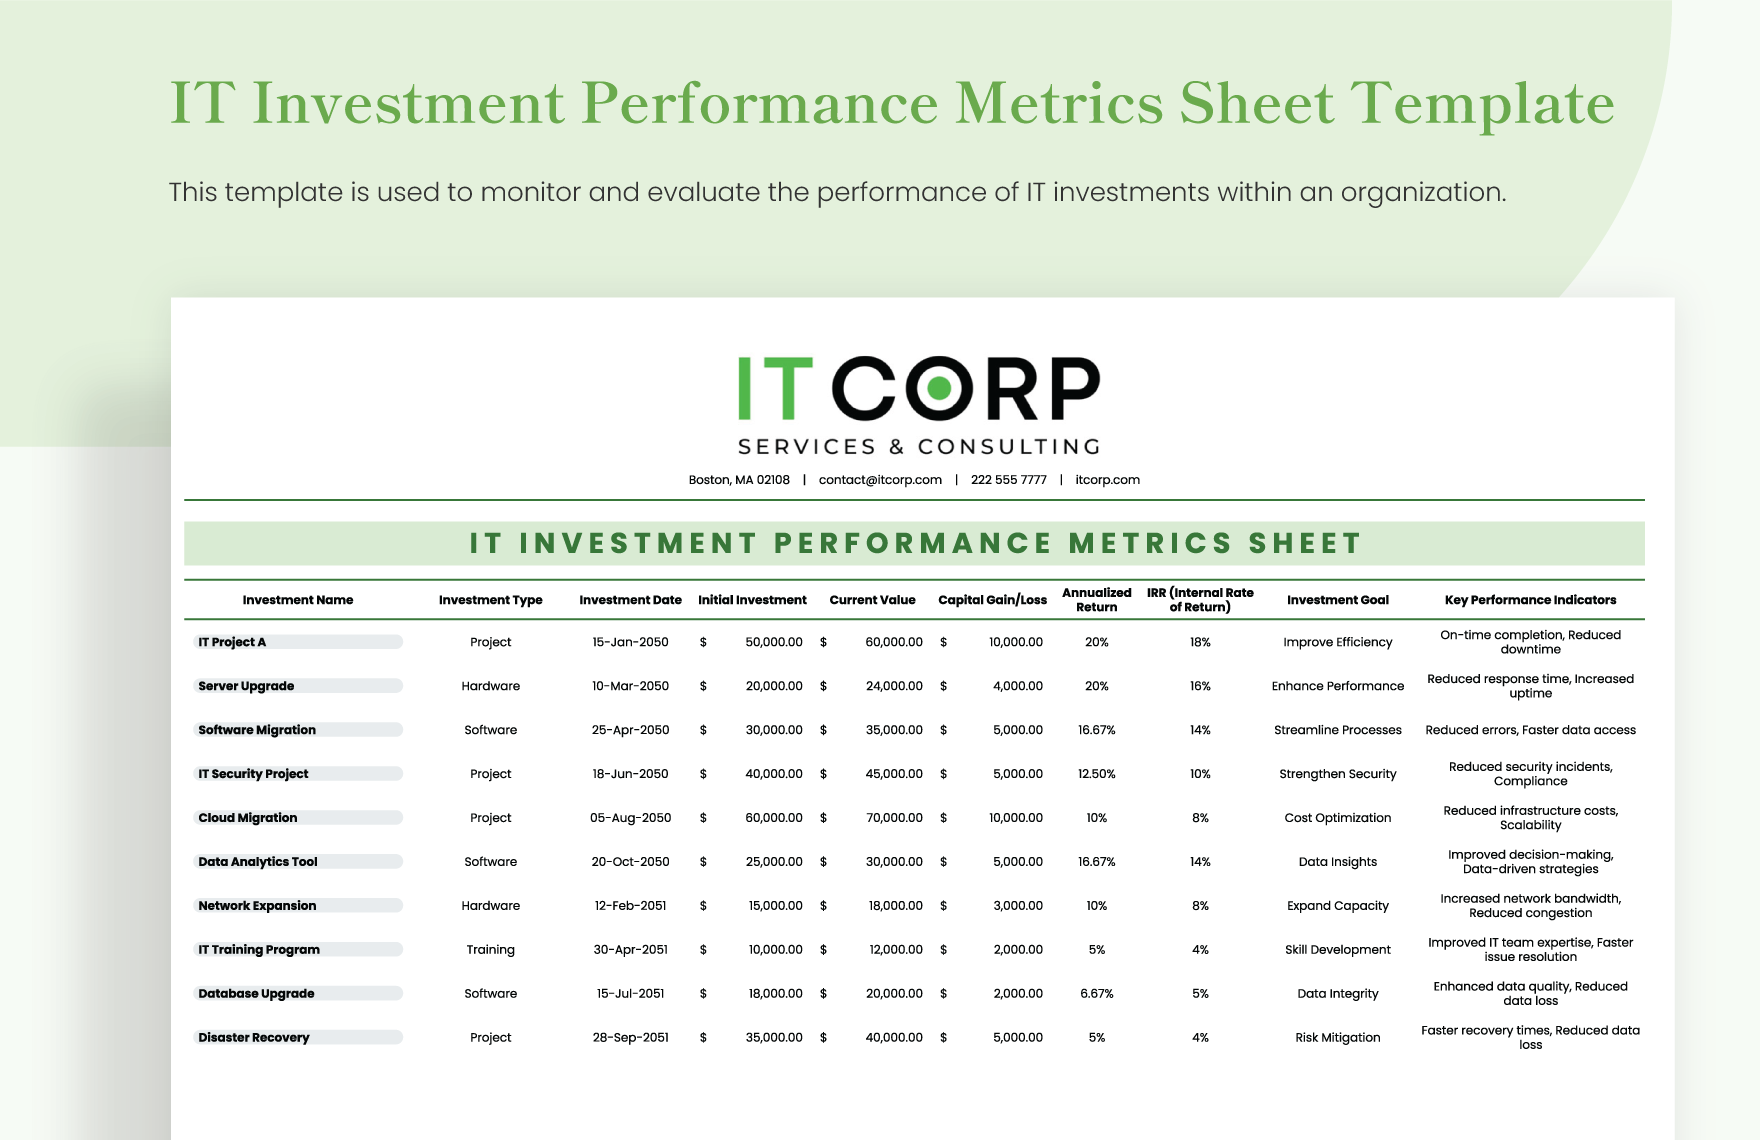 IT Investment Performance Metrics Sheet Template